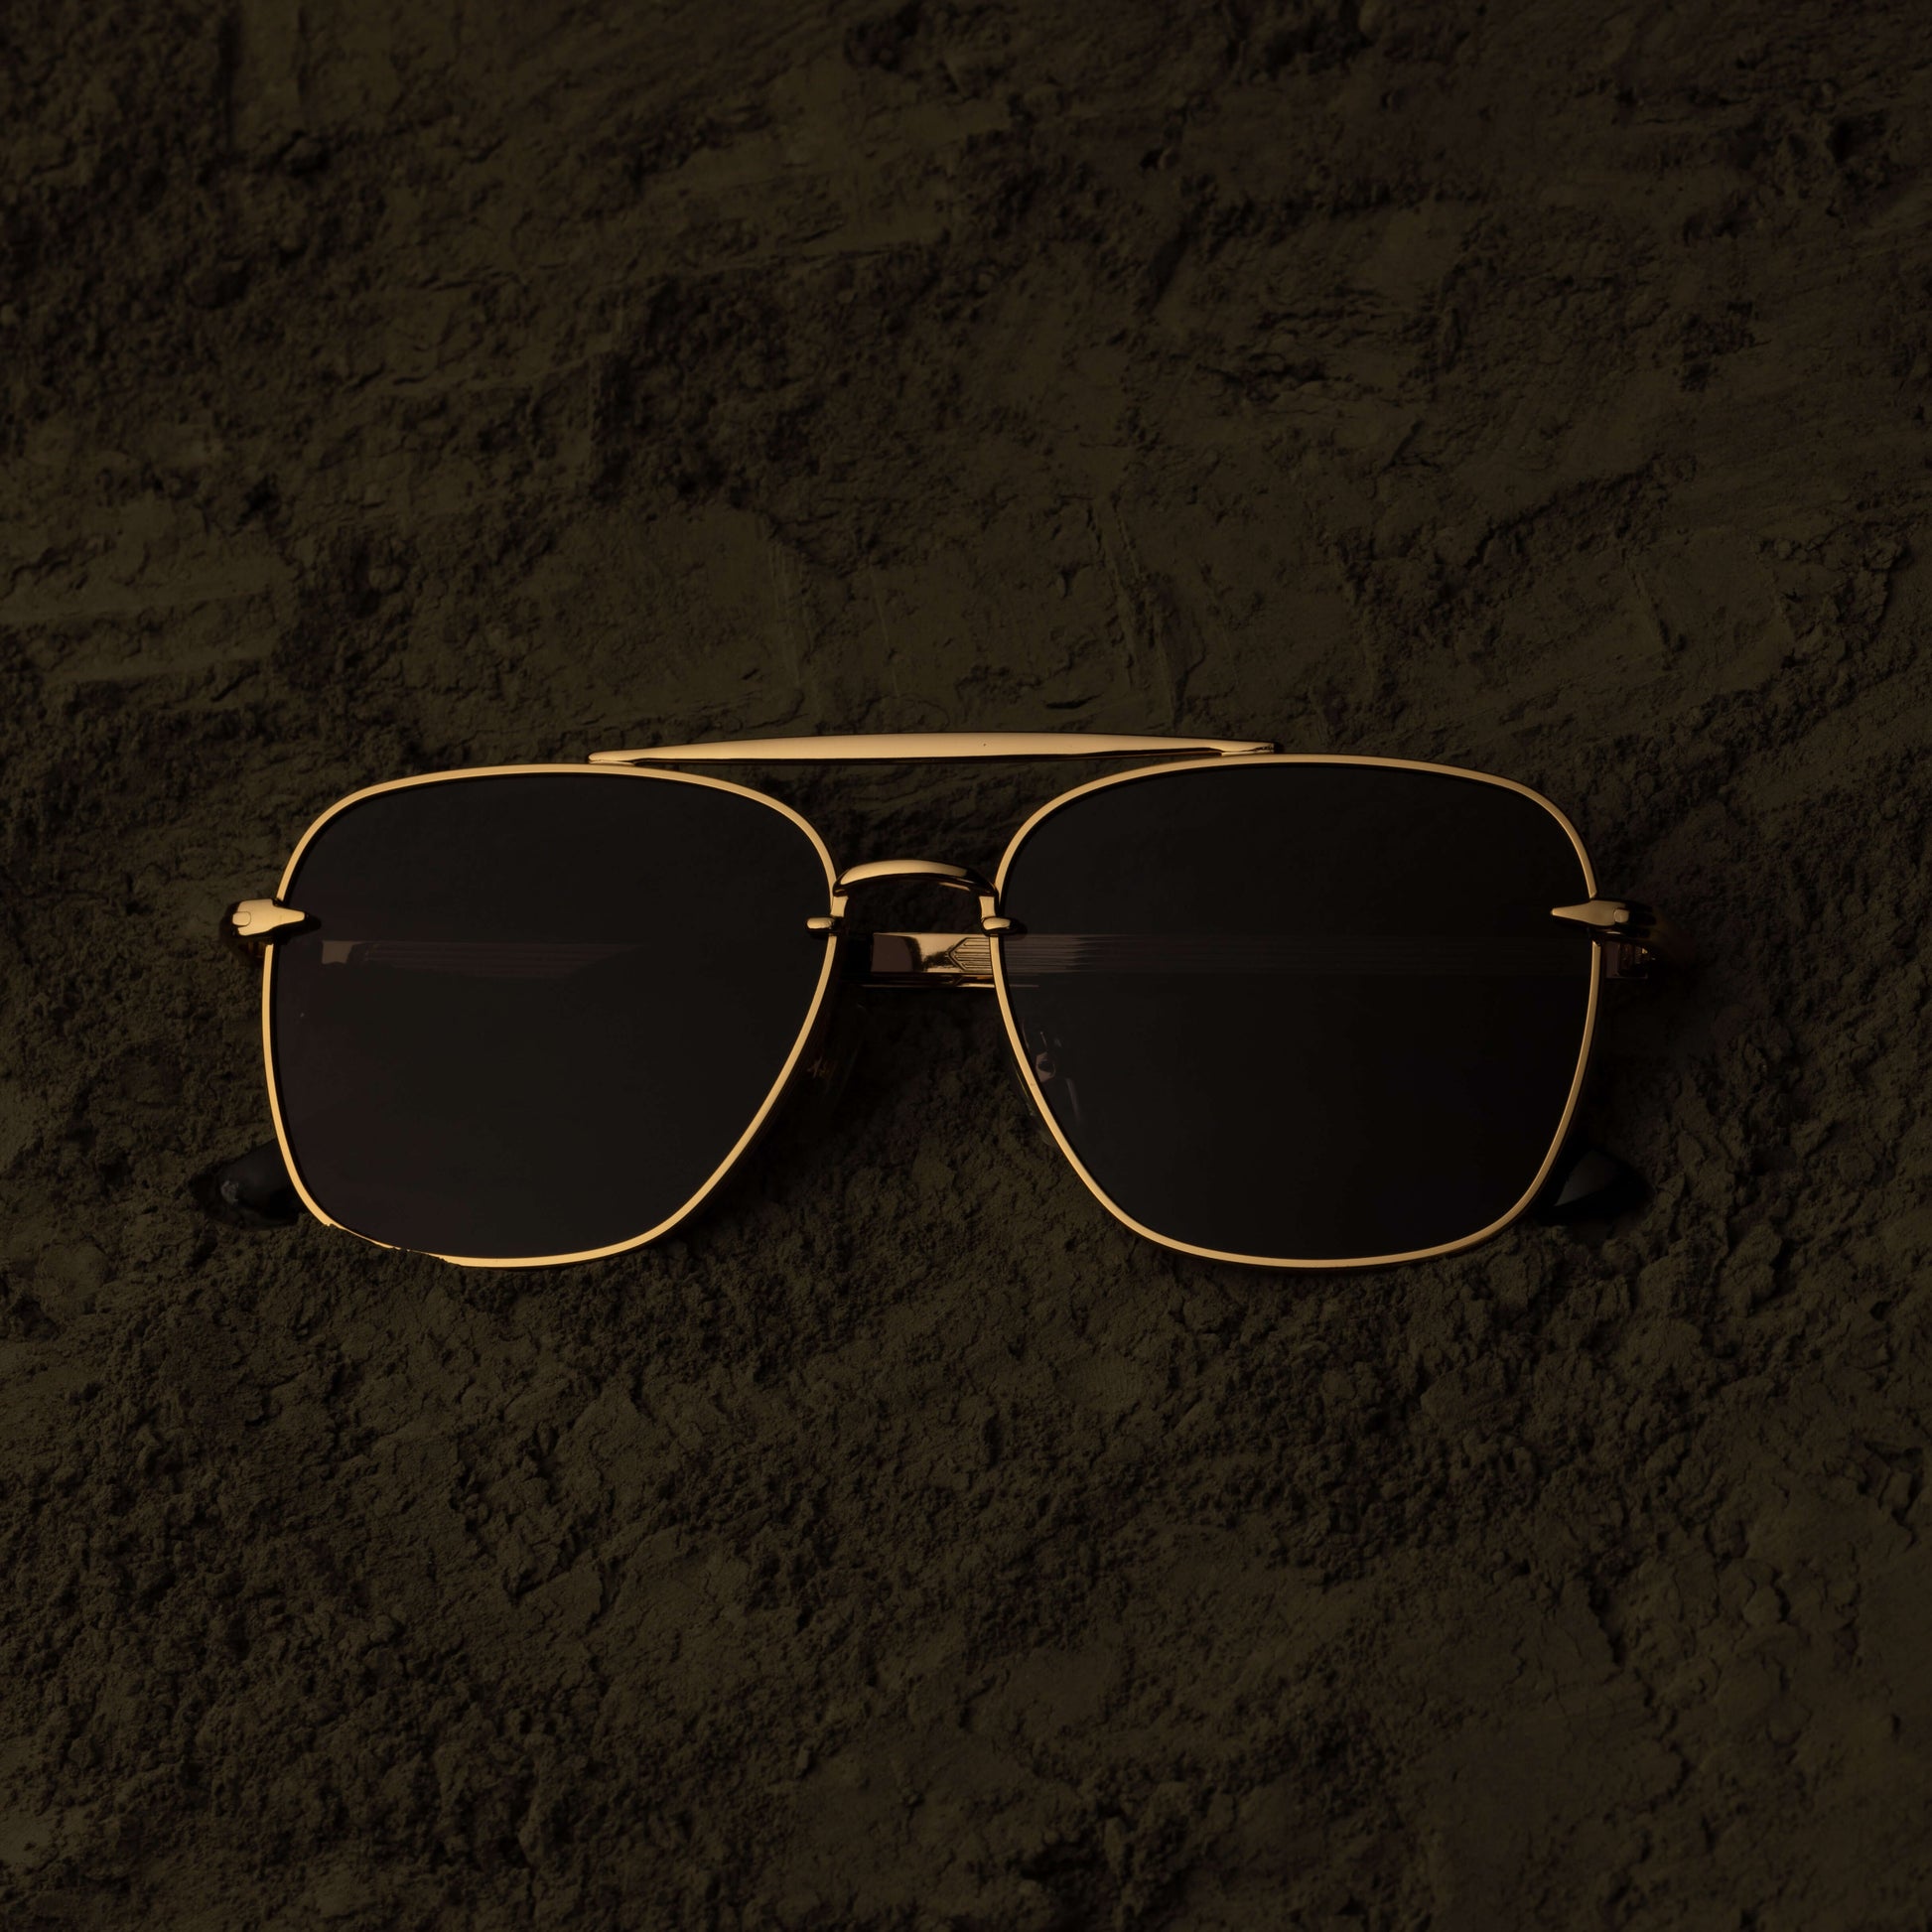 MRX - 18K Gold plated (black)•18K gold-plated frame•18K gold-plated temples • Frame suitable for prescription lenses• 100% UV protection • Fitting: Adjustable nosepadsDhs. 995.00